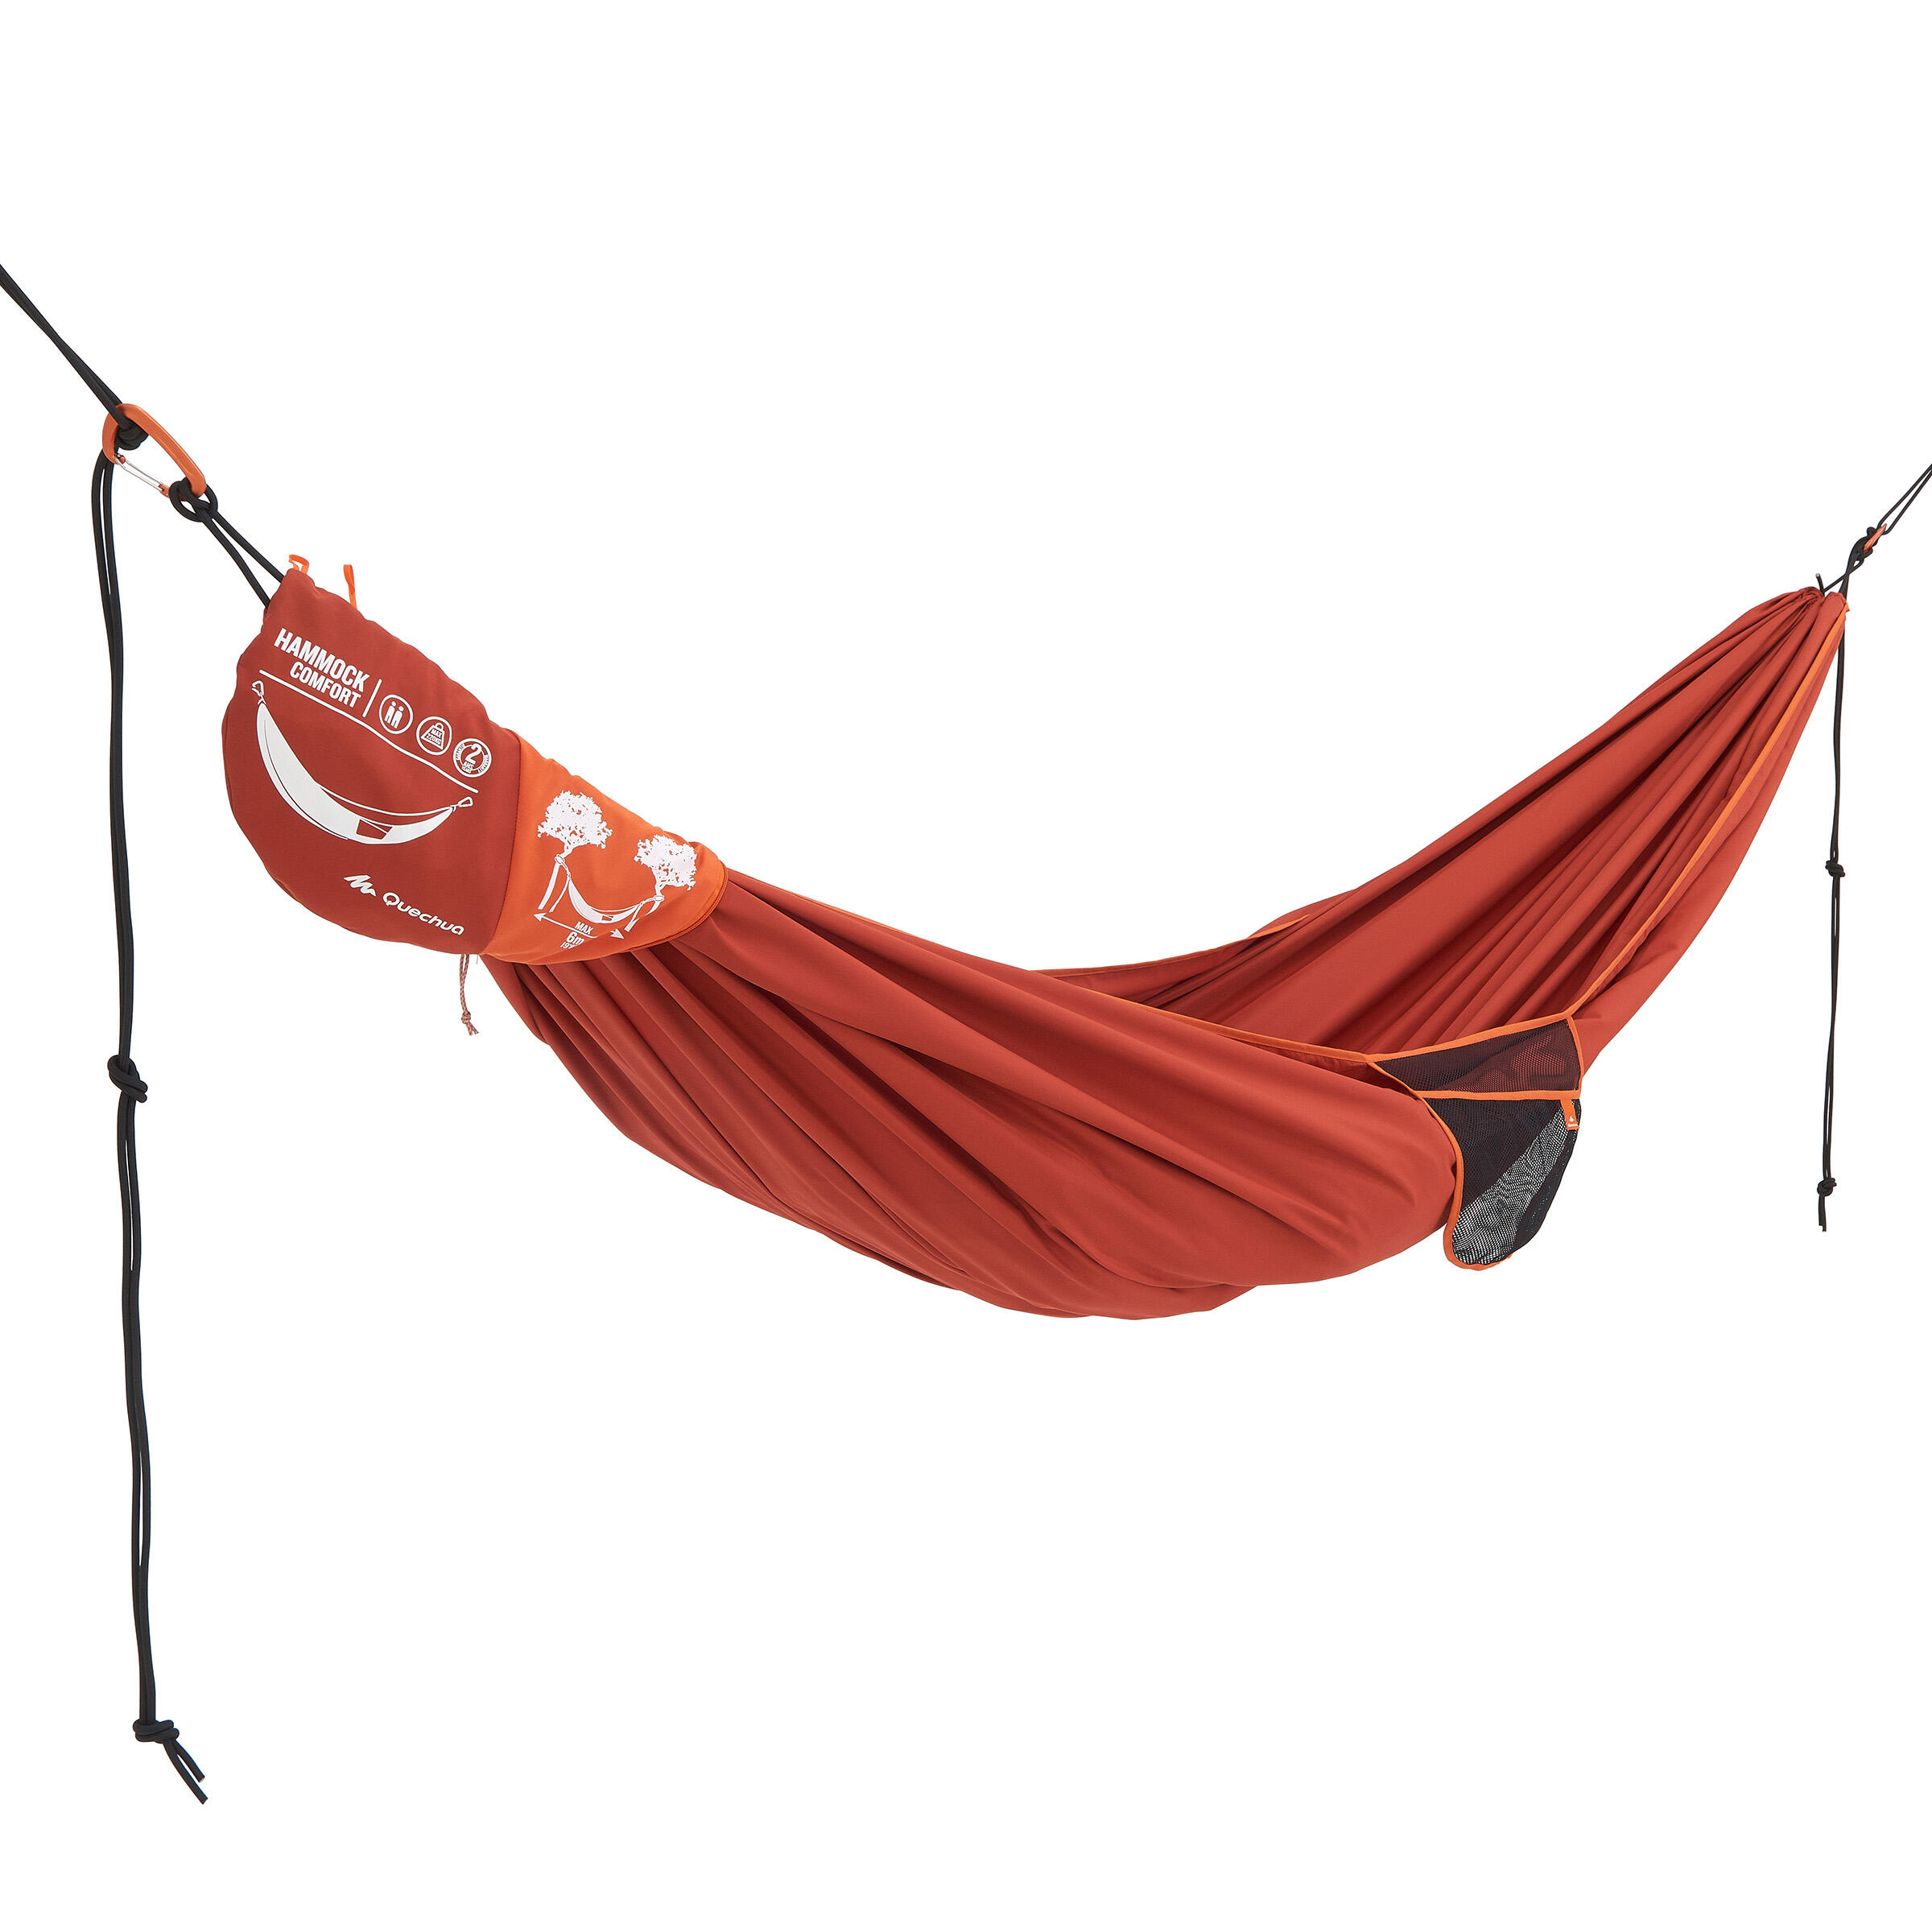 Two-person hammock - Comfort 280 x 175 